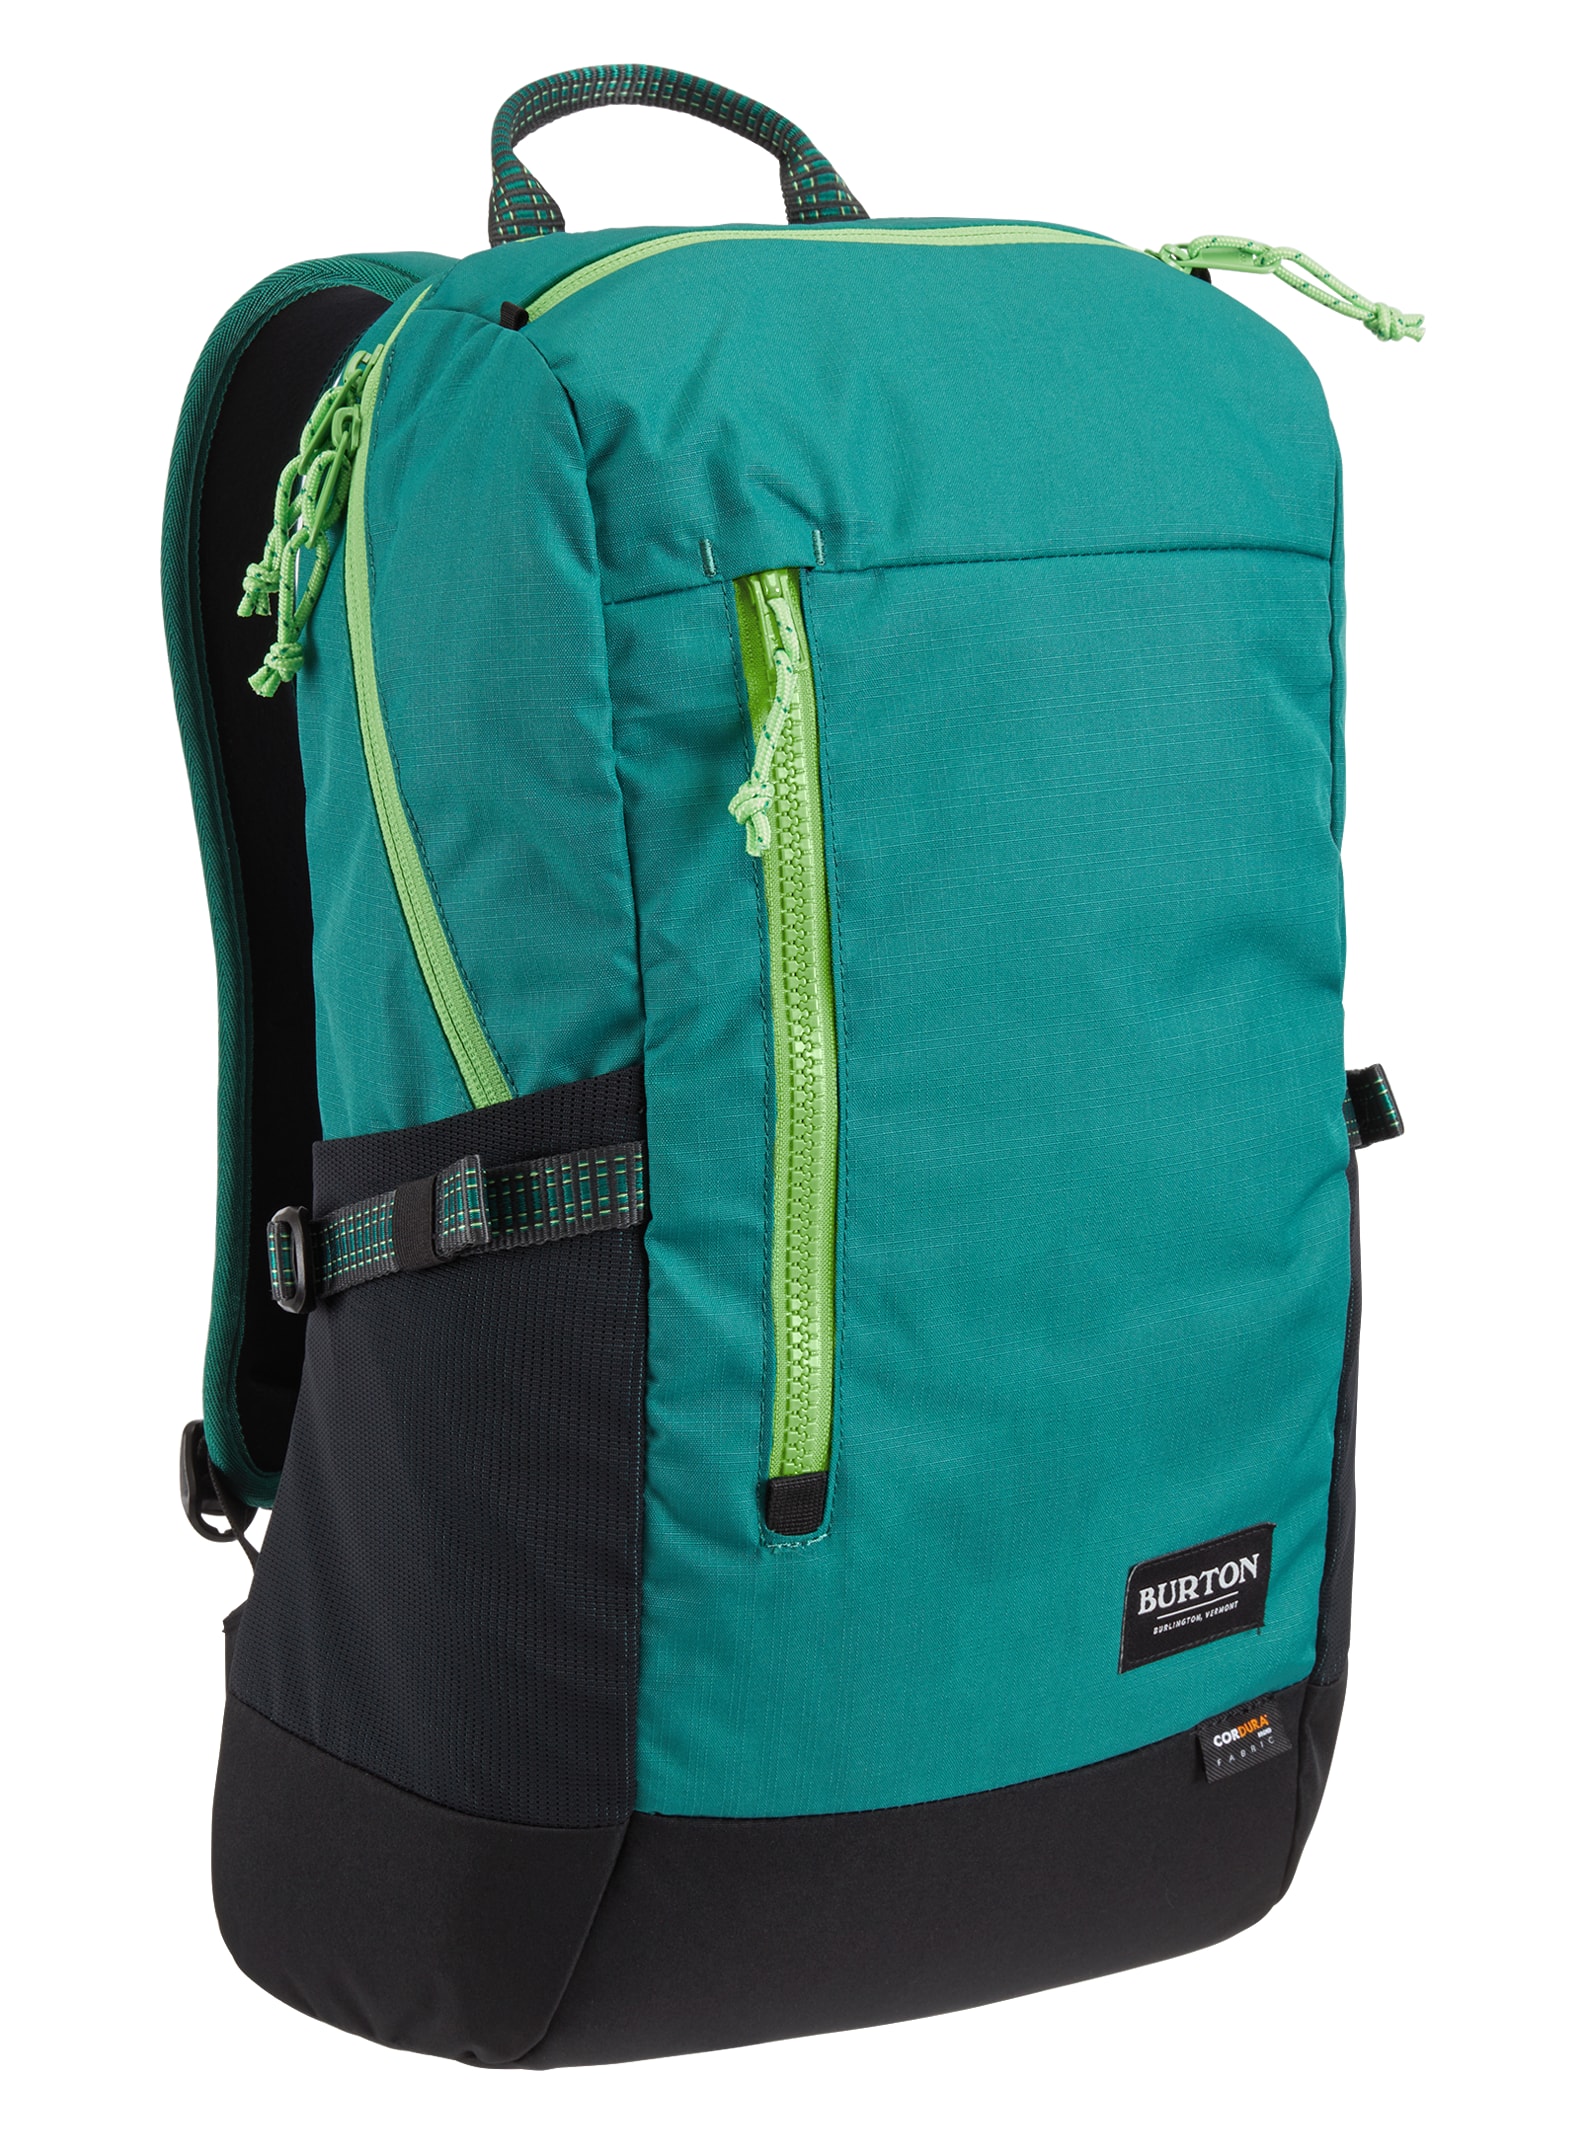 Burton Prospect 2.0 20L Backpack | Burton.com Spring 2021 US